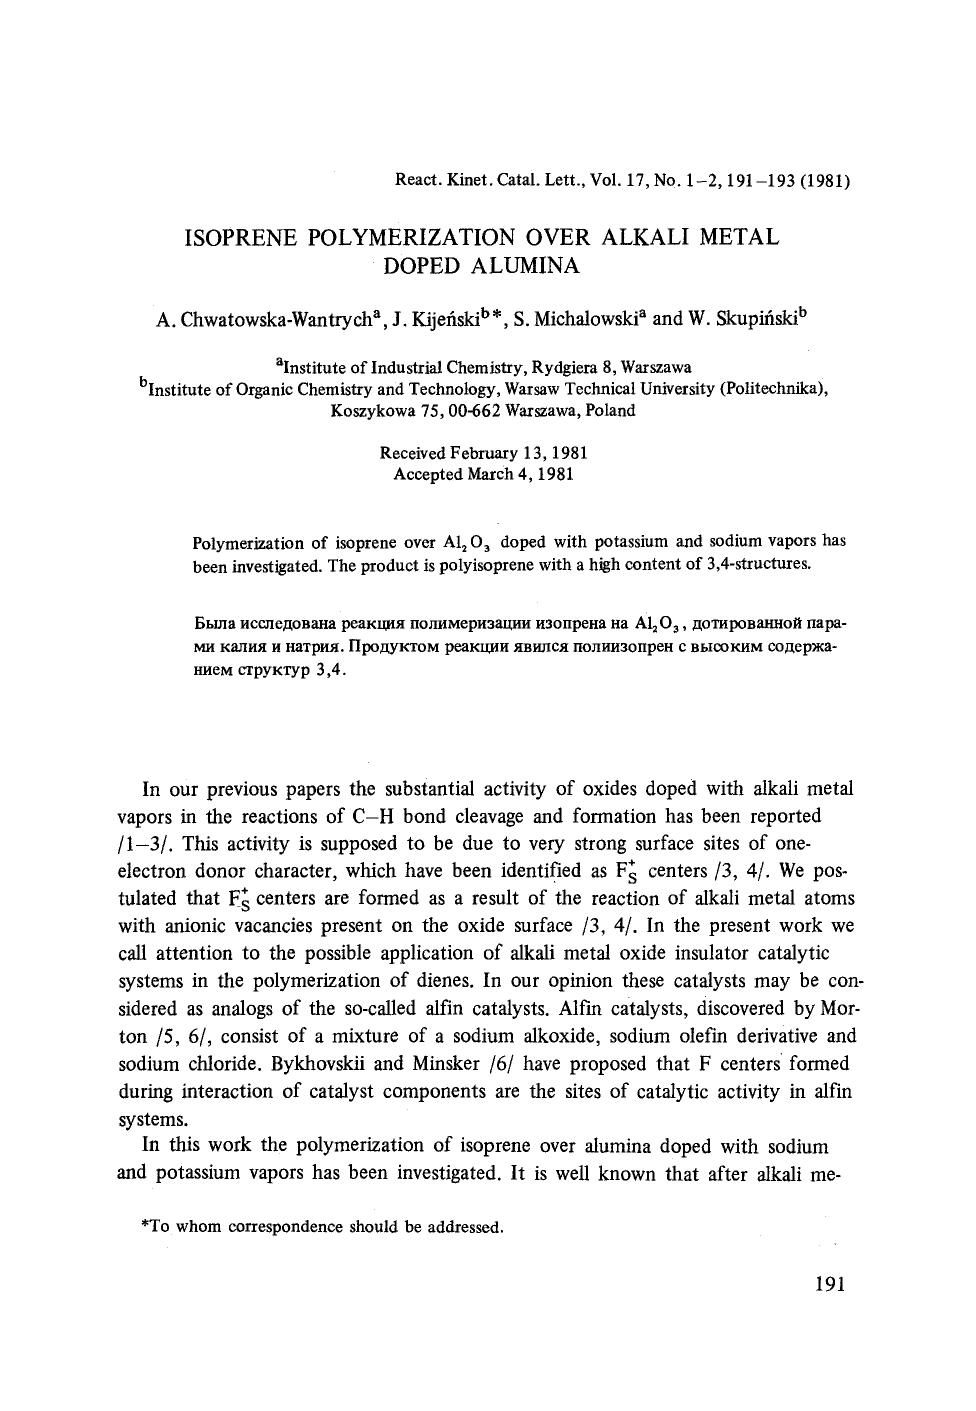 Isoprene polymerization over alkali metal doped alumina by Unknown